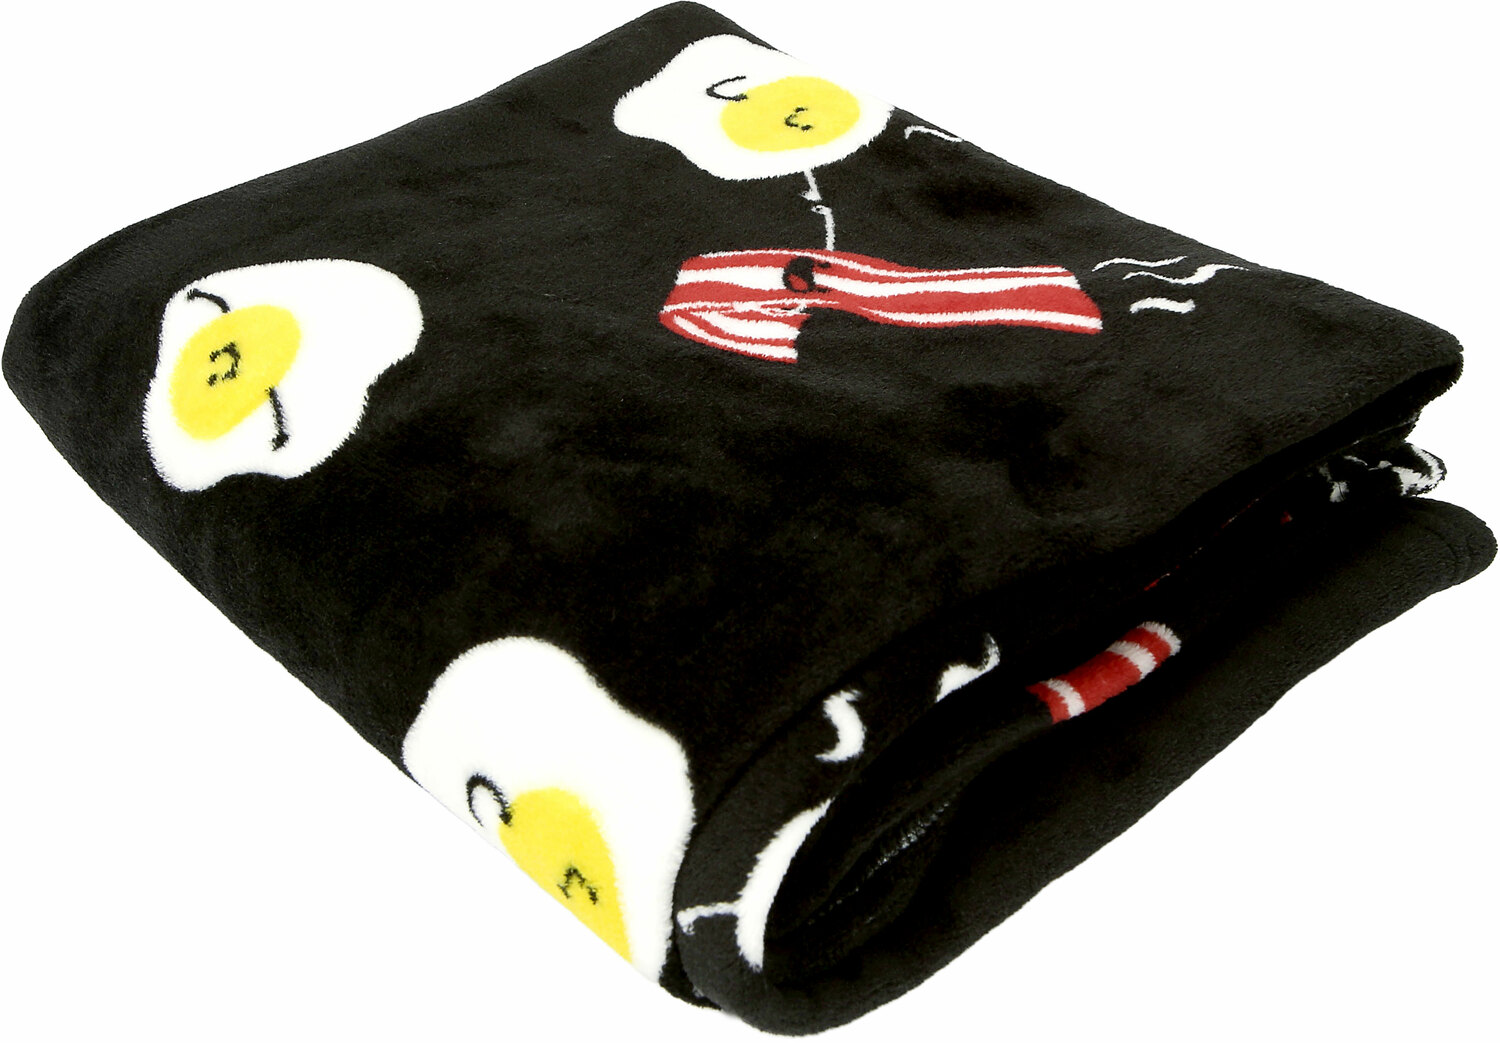 Bacon & Eggs  by Late Night Snacks - Bacon & Eggs  - 50" x 60" Royal Plush Blanket with Drawstring Bag